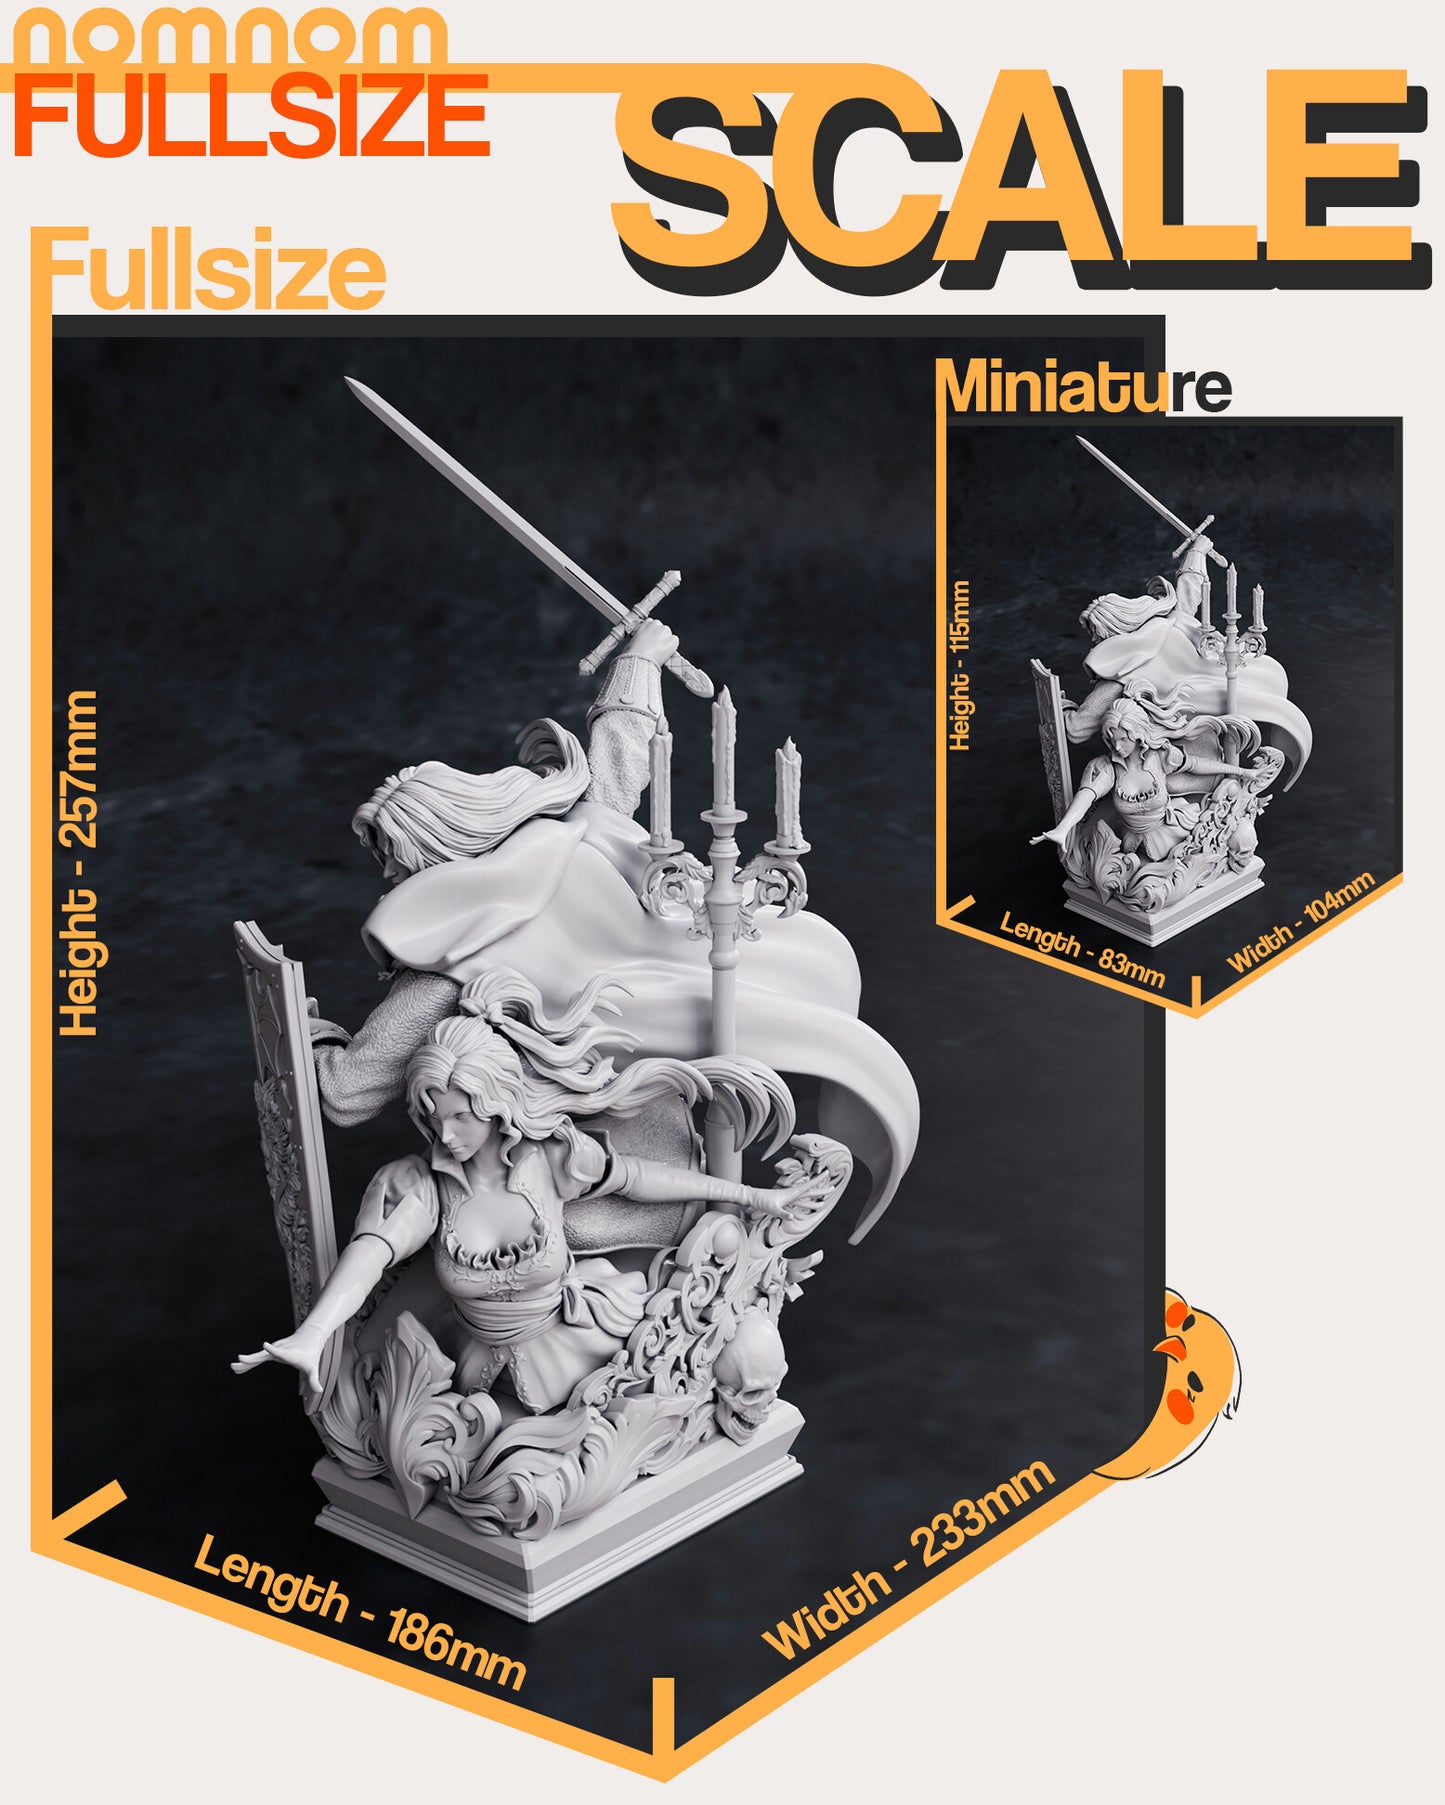 Alucard x Maria - Castlevania Symphony of the Night 3D Printed Model by Nomnom Figures